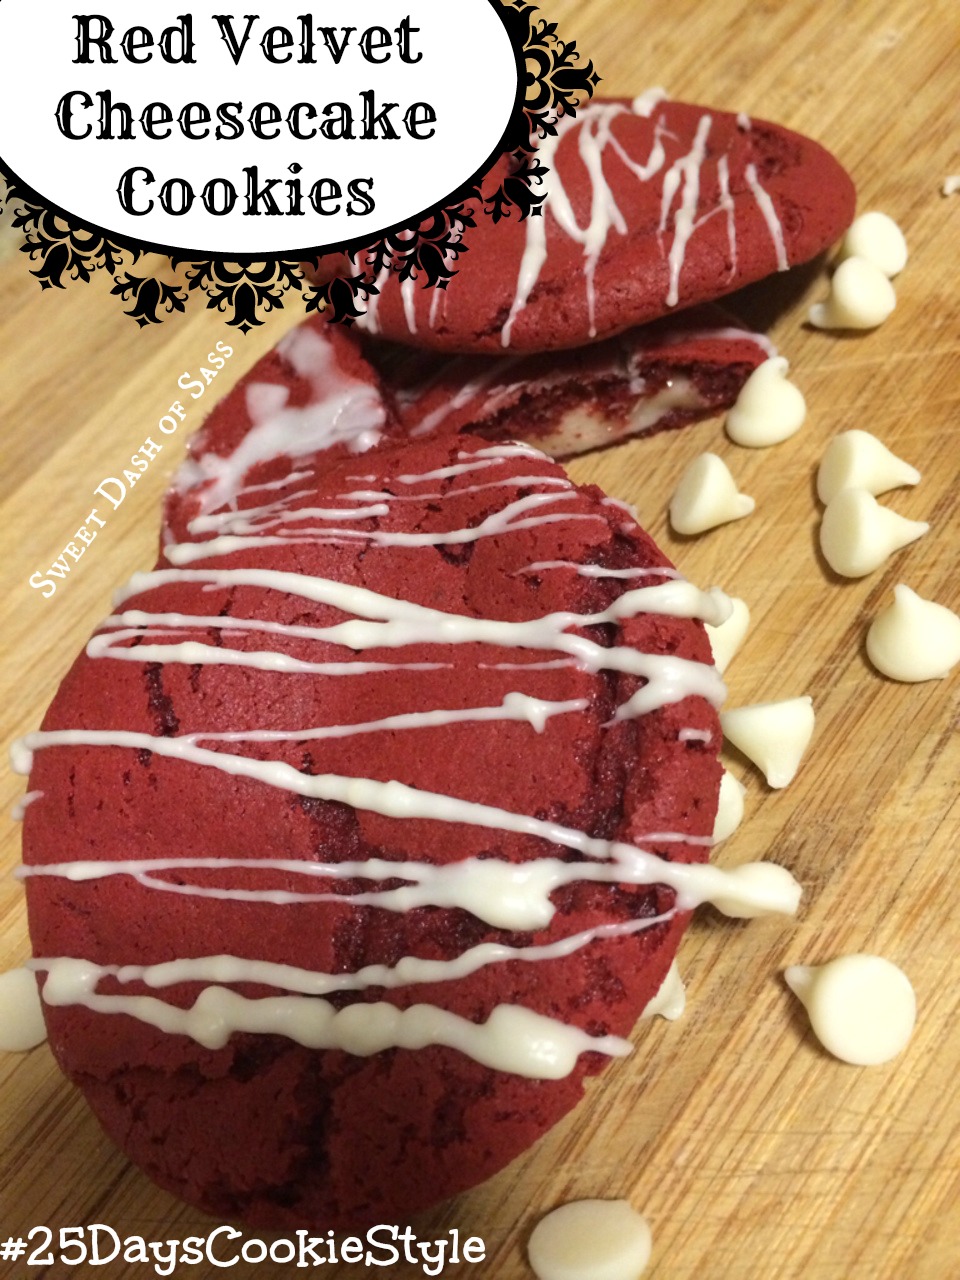 RedVelvet Cheesecake Cookies - www.SweetDashofSass.com #25DaysCookieStyle